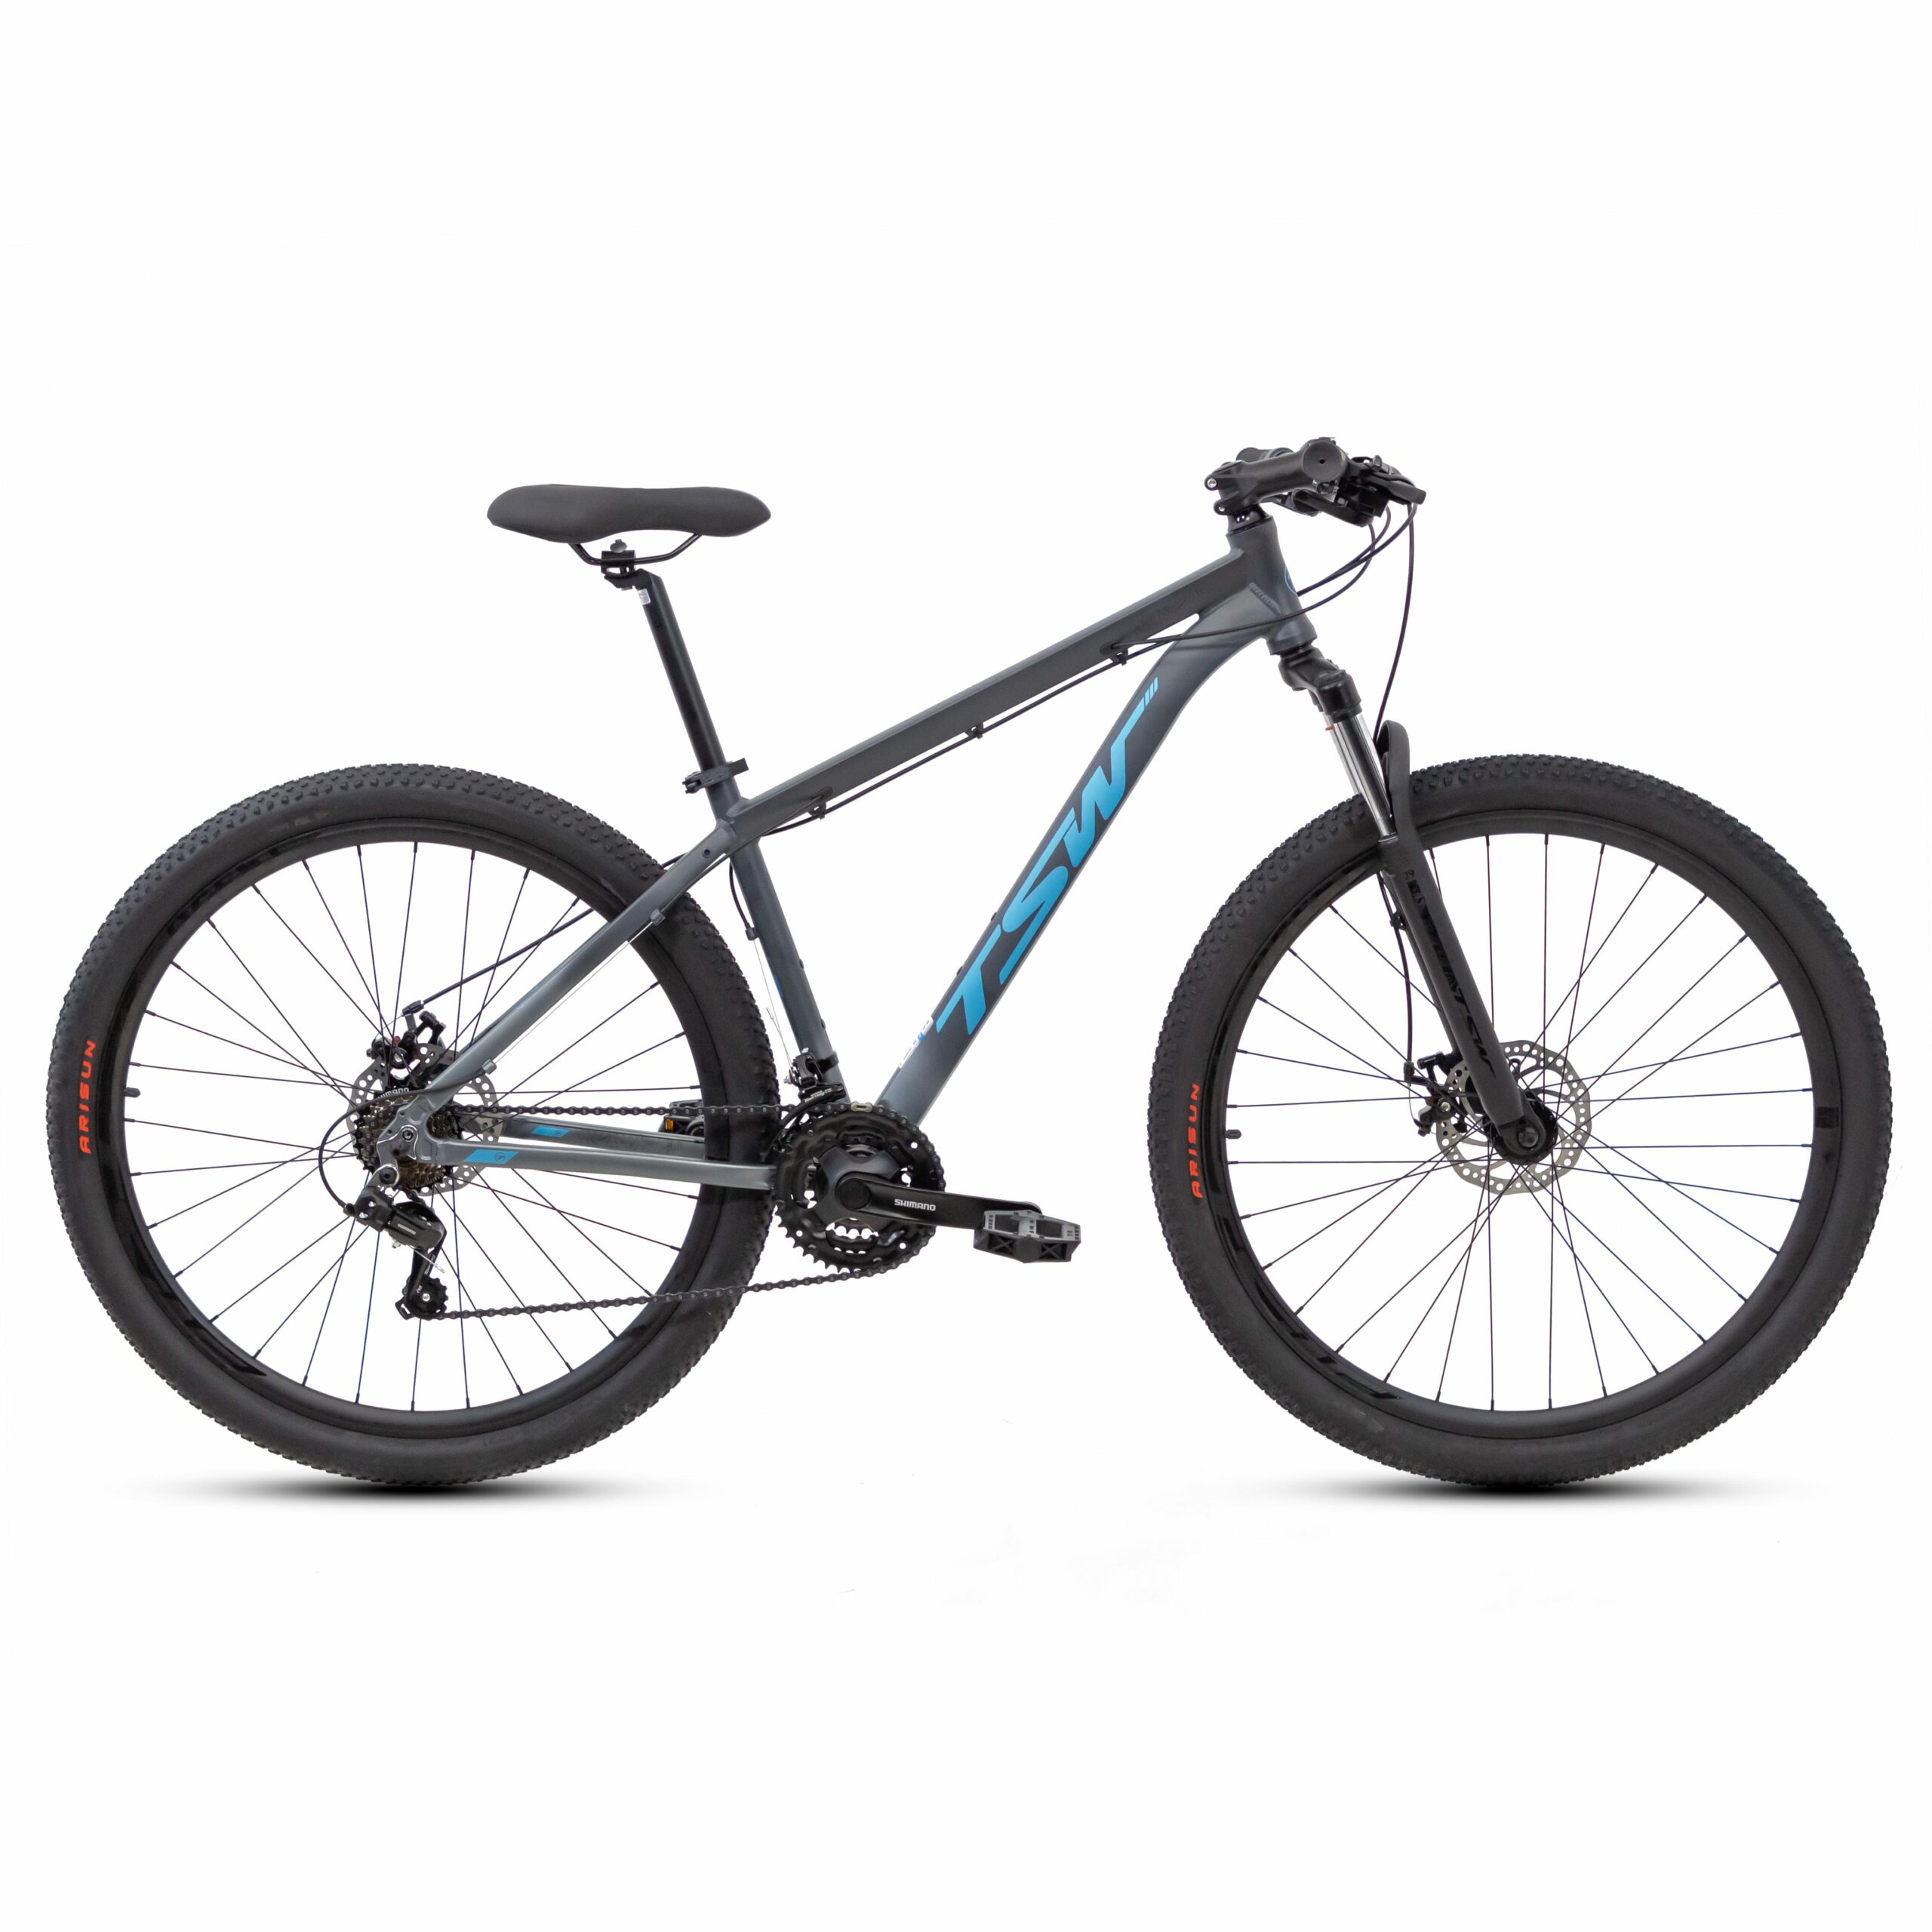 Bicicleta TSW Ride | 2021/2022 - 15.5", Cinza/Azul